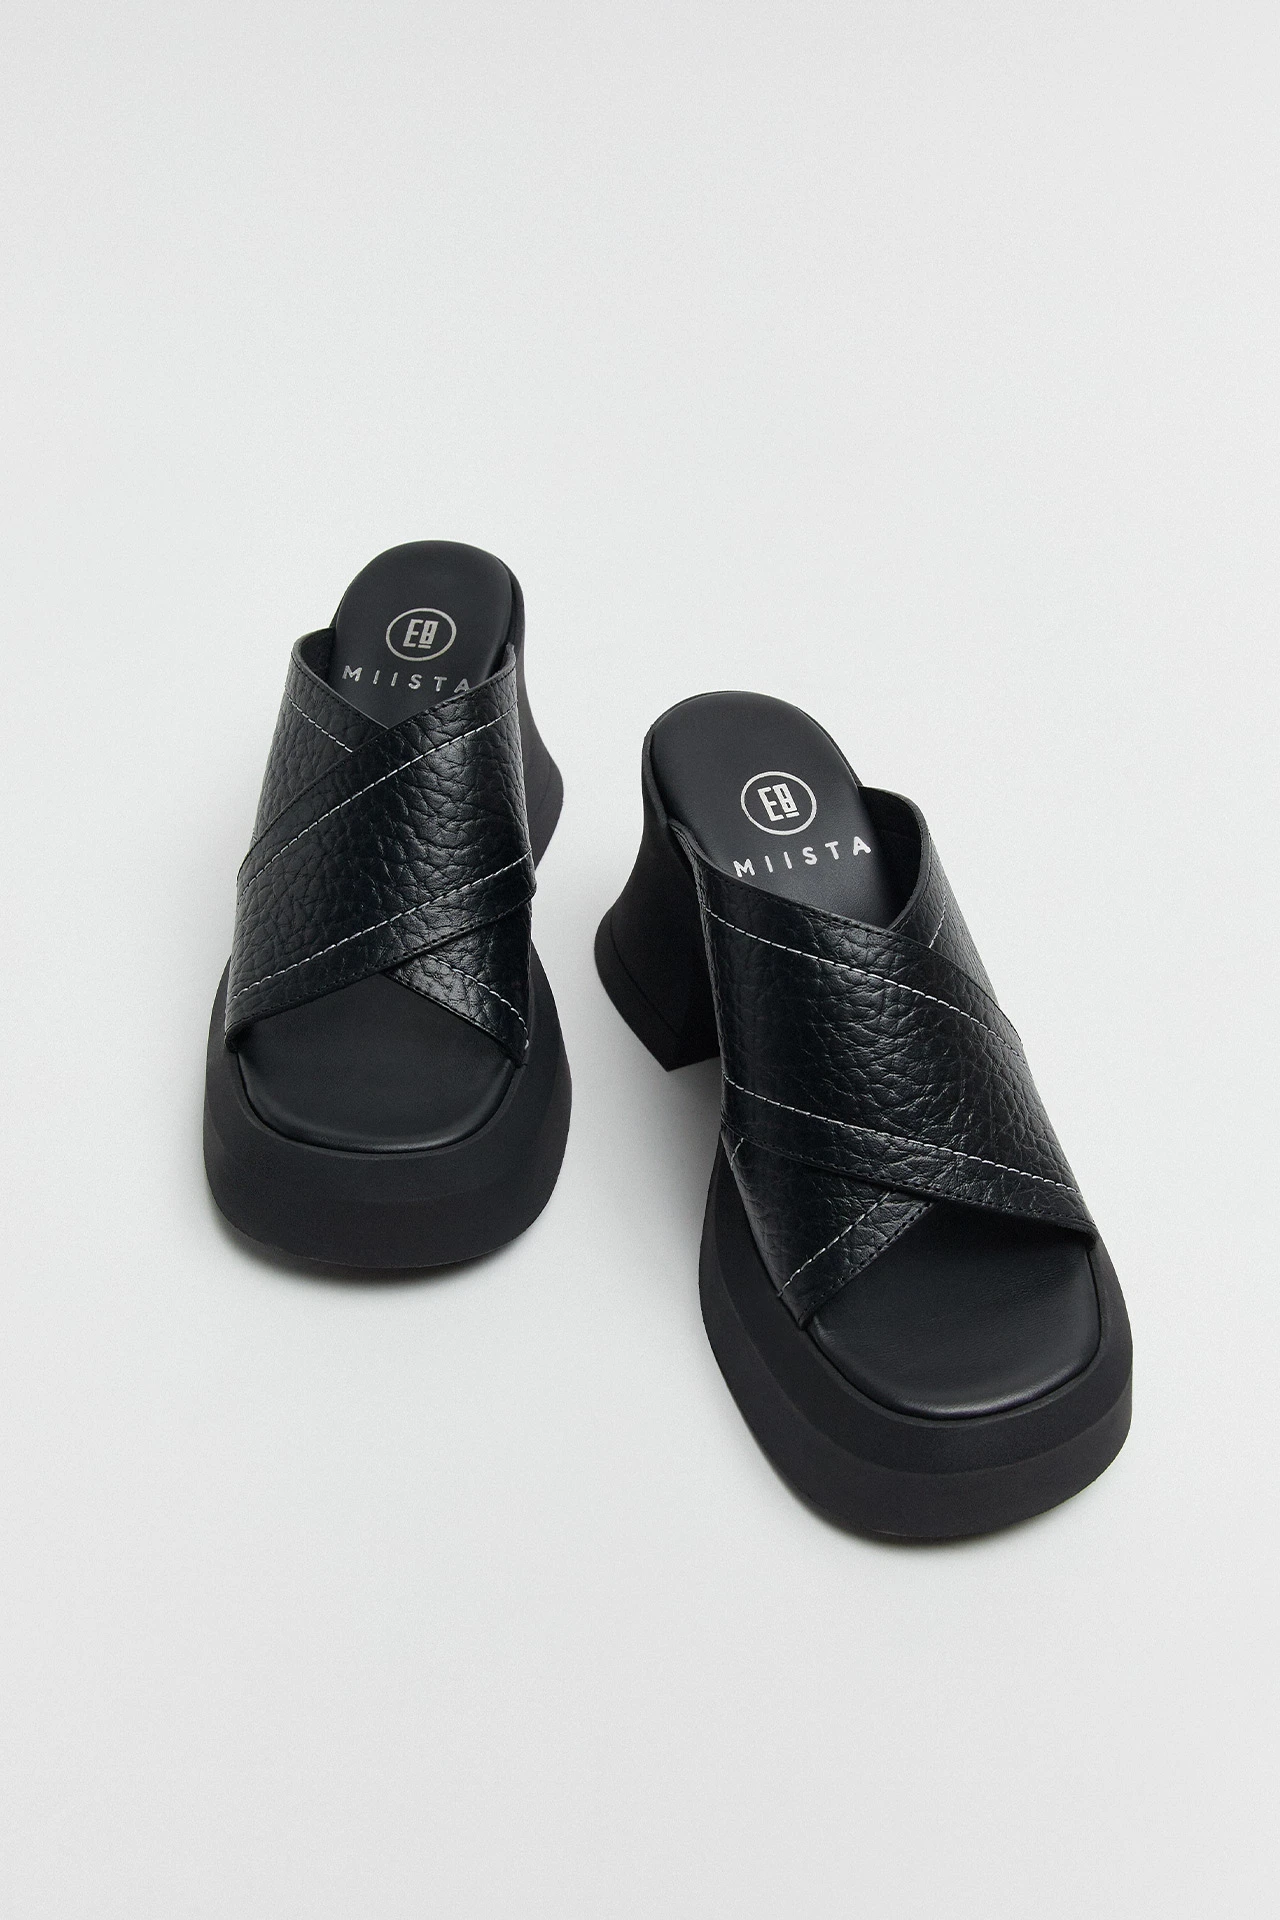 E8-raissa-black-mule-sandal-04